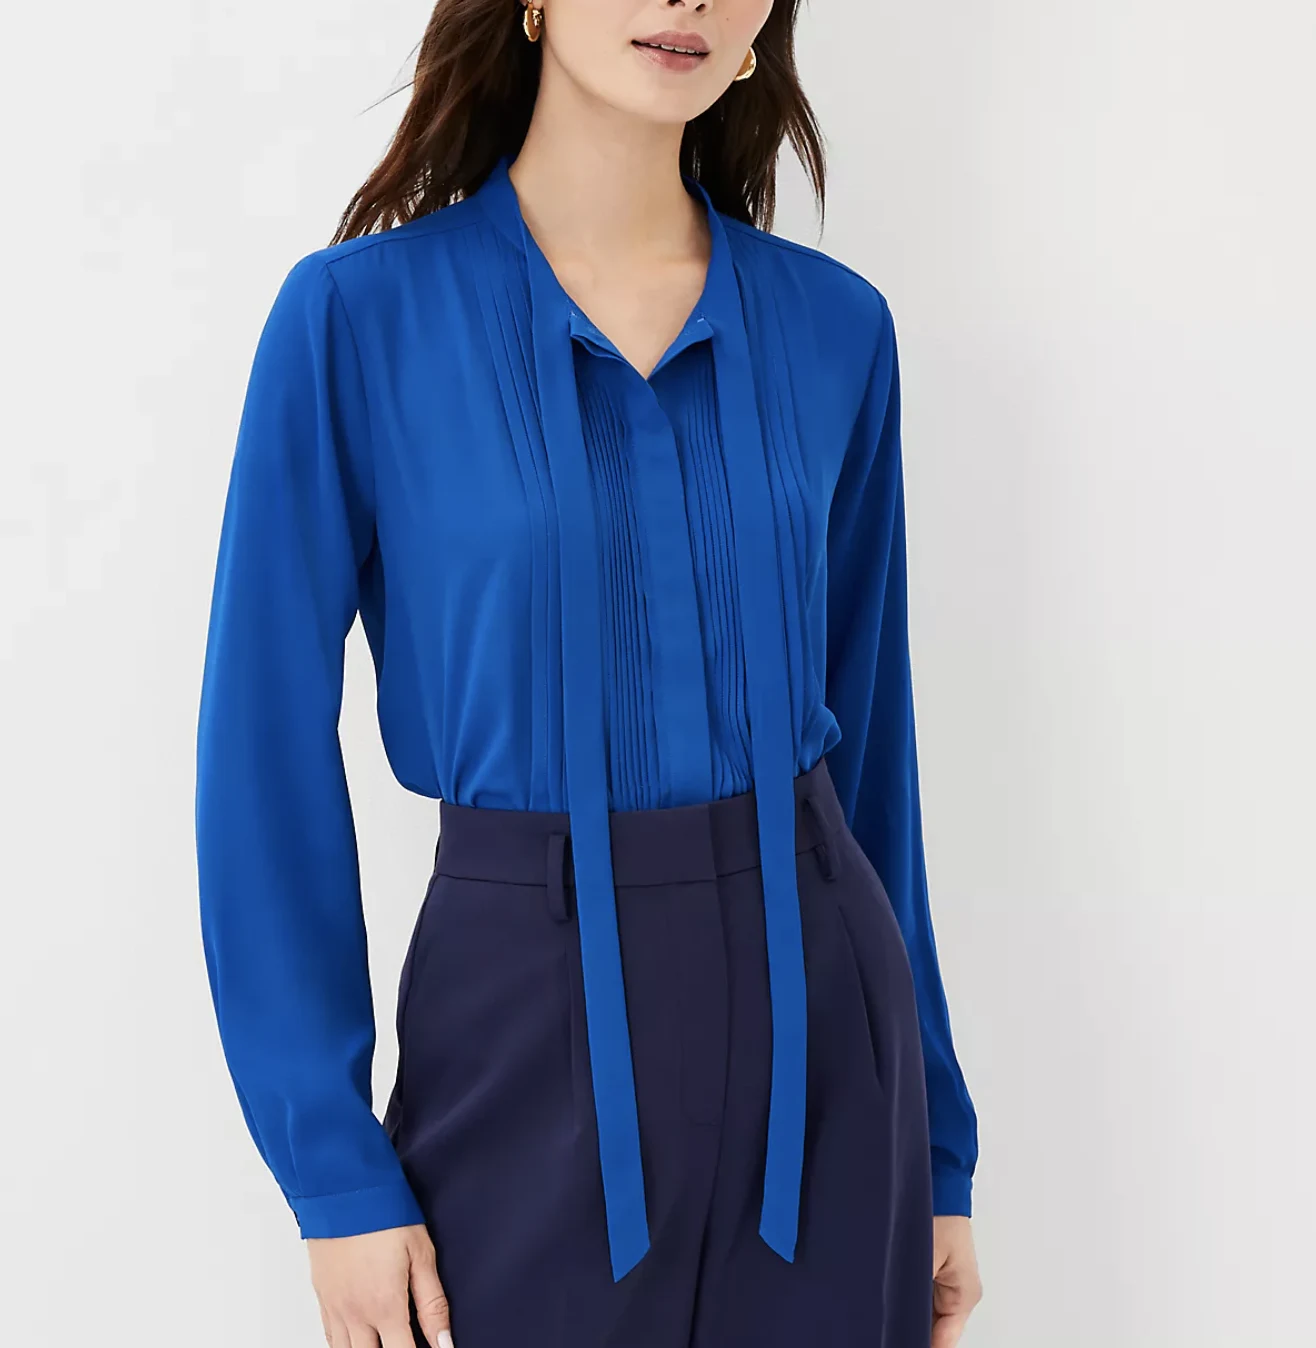 royal blue blouse outfit